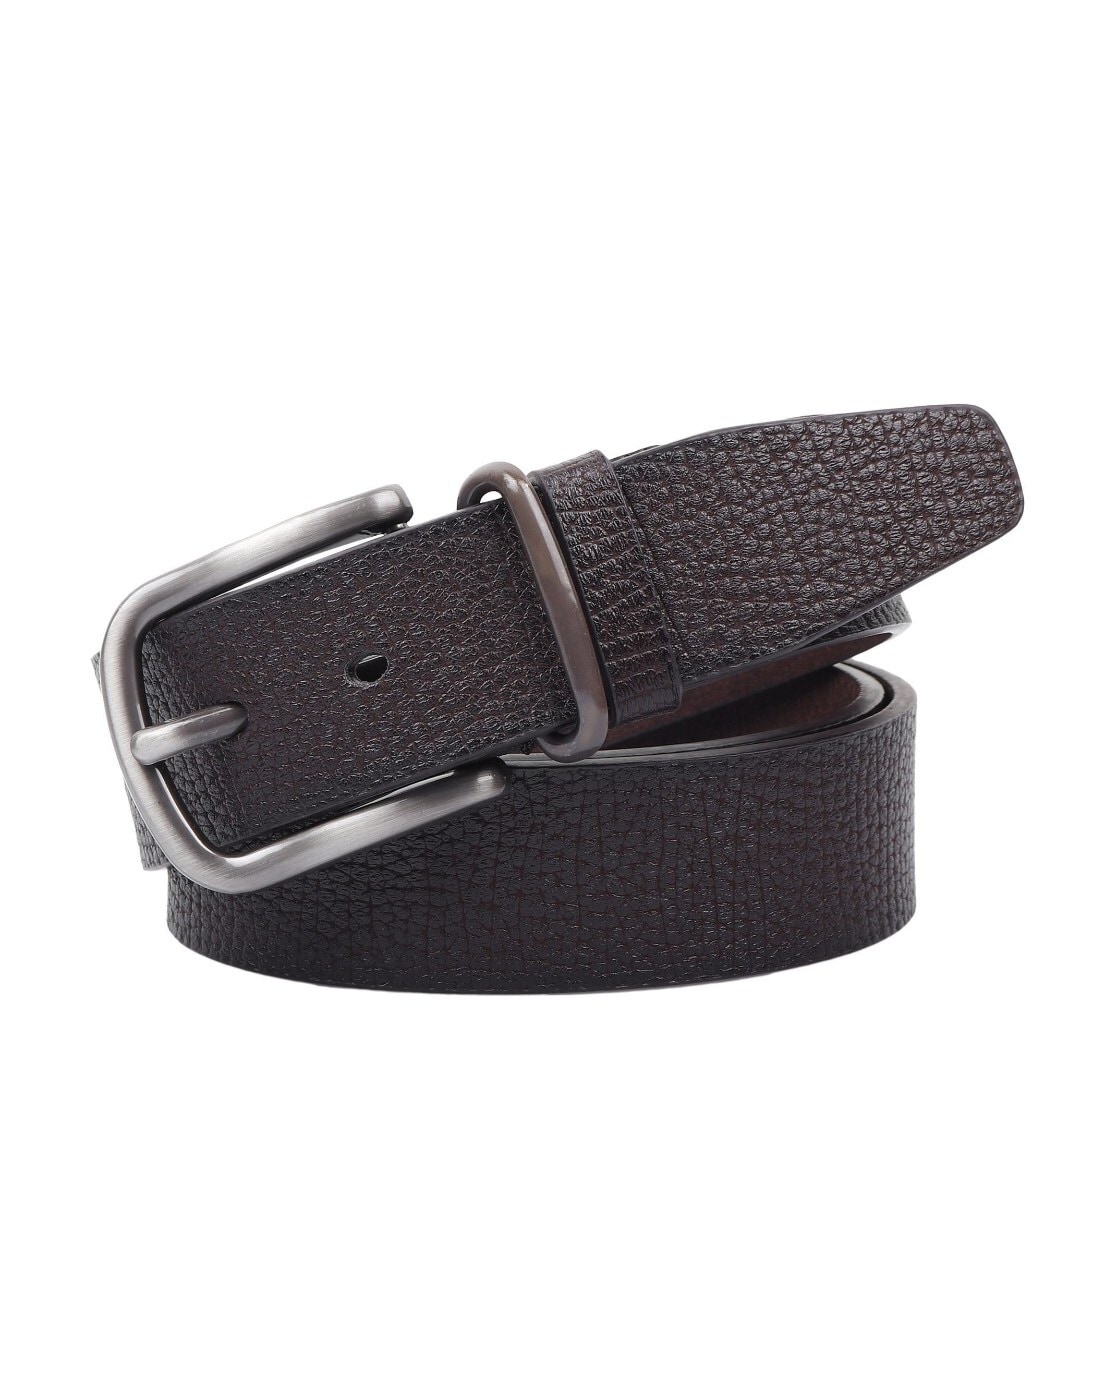 Buy Brown Belts for Men by AXXTITUDE Online